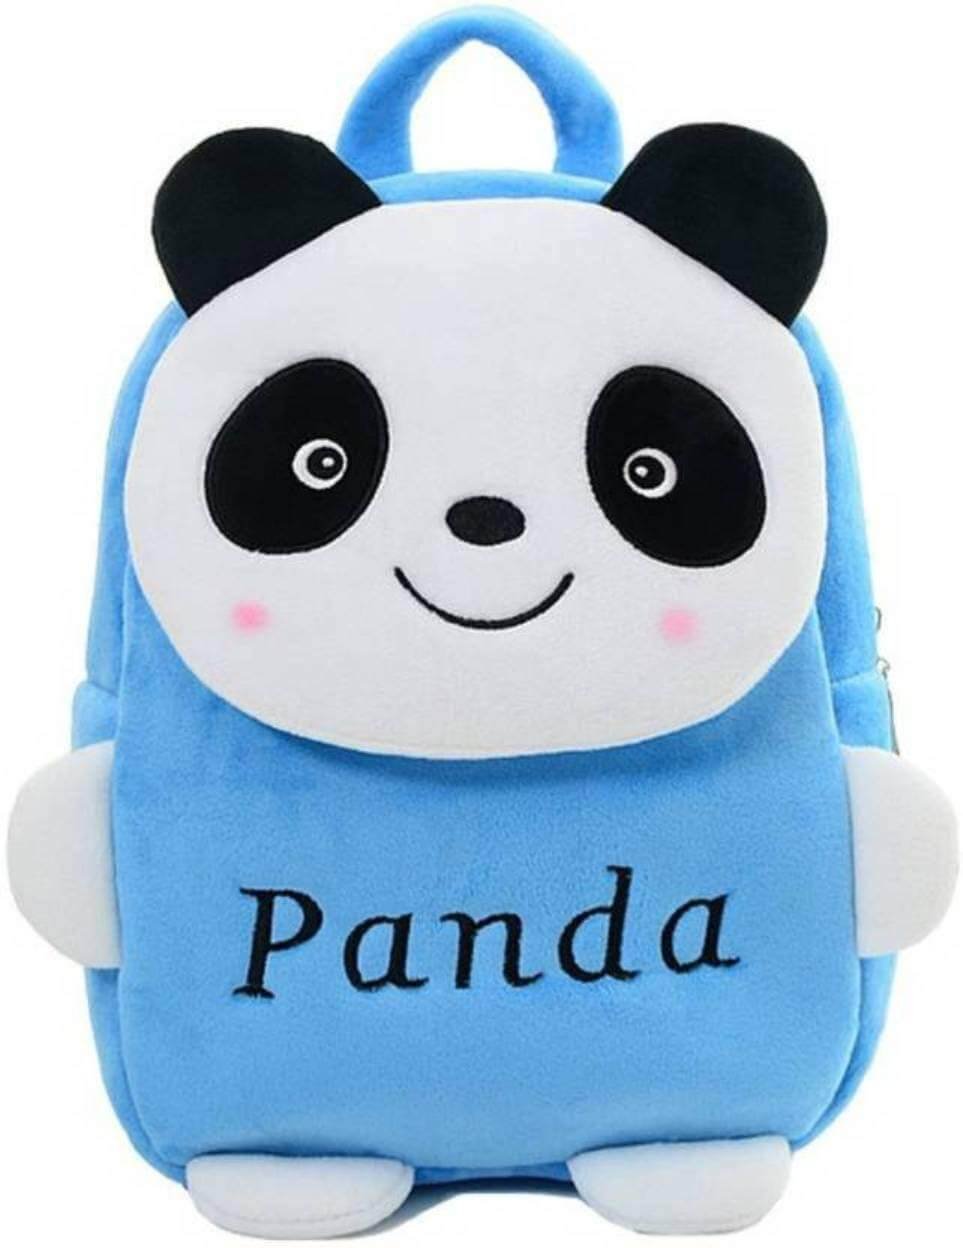 DZert Panda Kids School Bag Soft Plush Backpack Cartoon Toy, School Bag for Kids (Blue)School Bag for Kids (Blue)